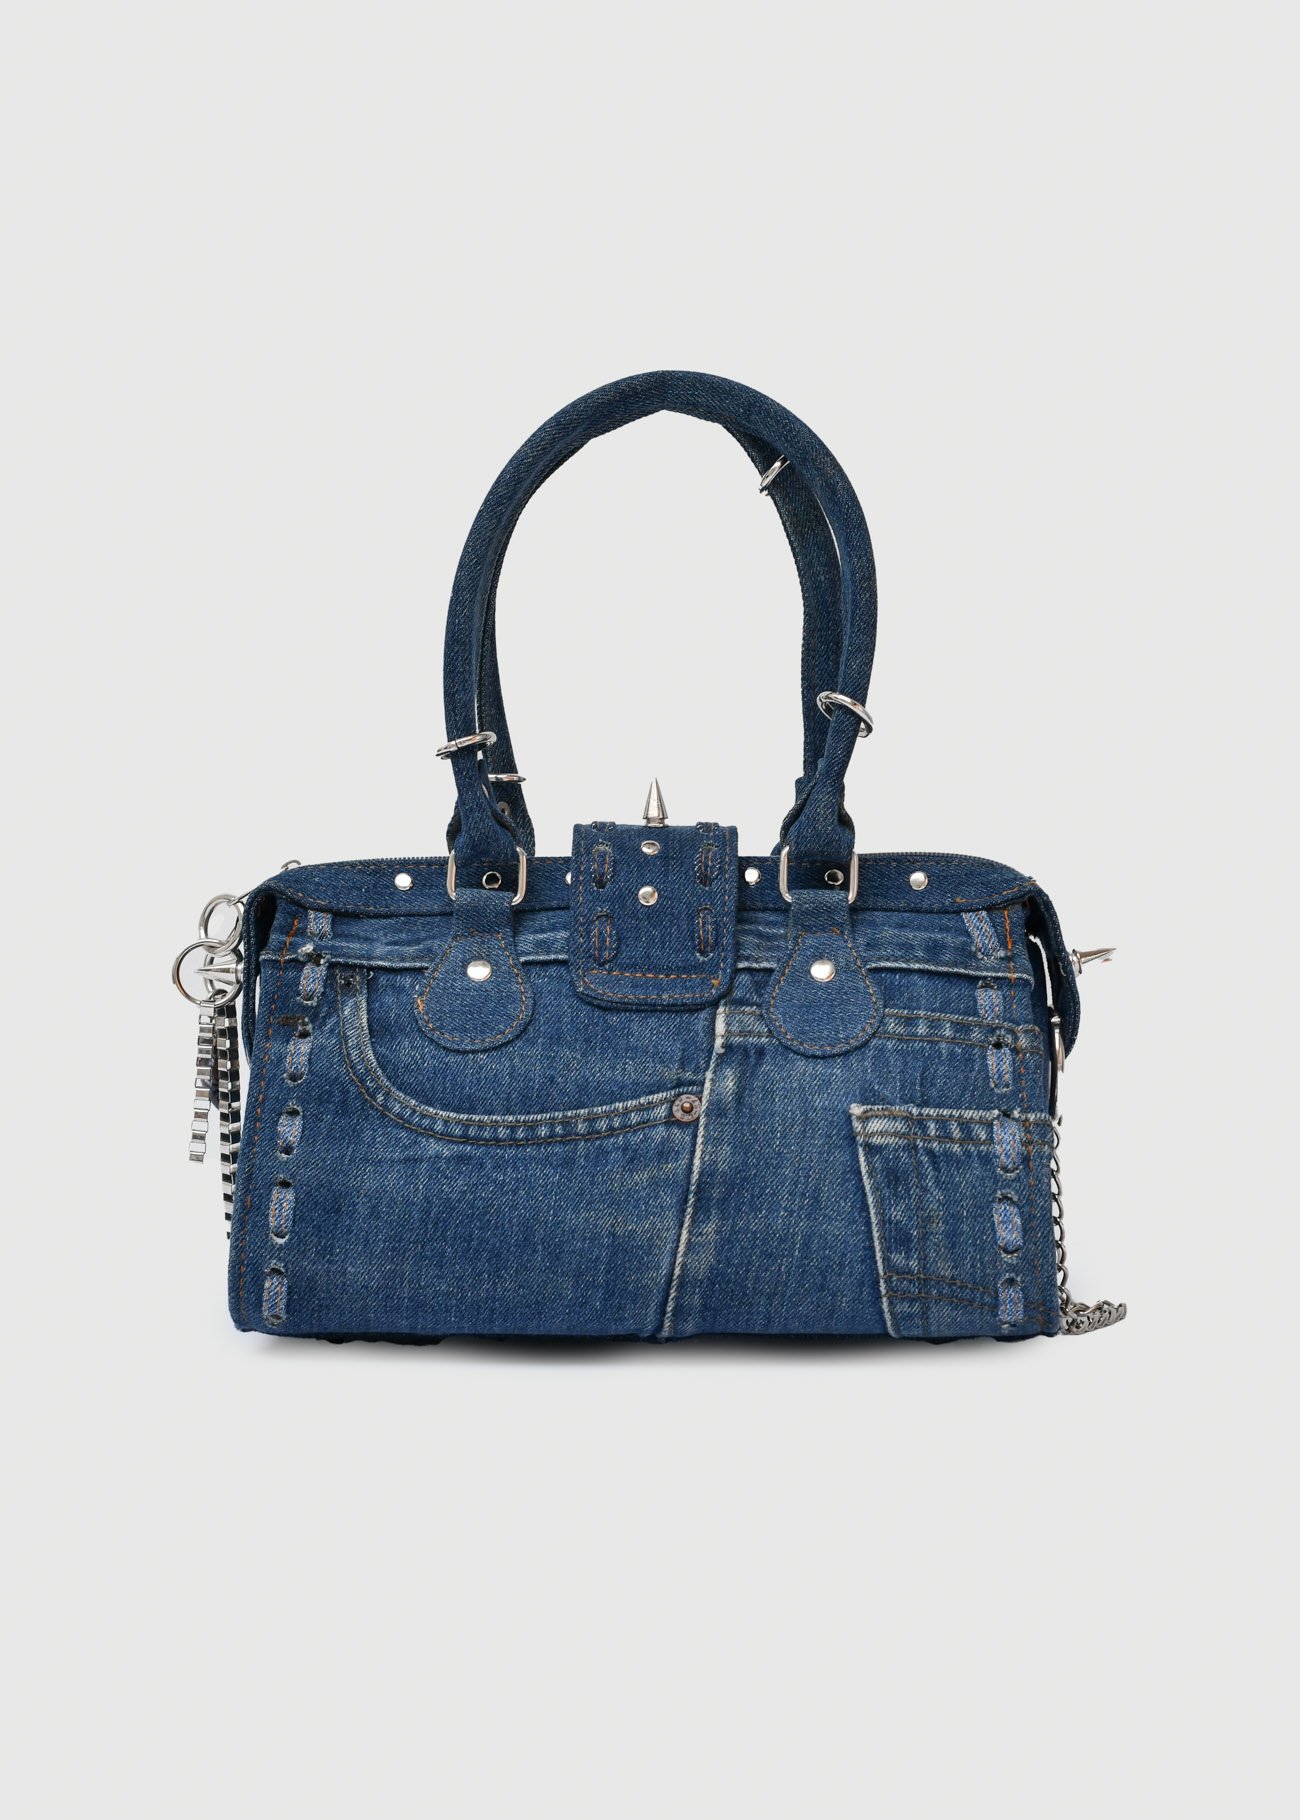 Buy AOCINA Denim Purse Blue Jean Bags for Women Denim Tote Bag Jean Purses  and Handbags for Teen Girls Women (E-Dark Blue) at Amazon.in